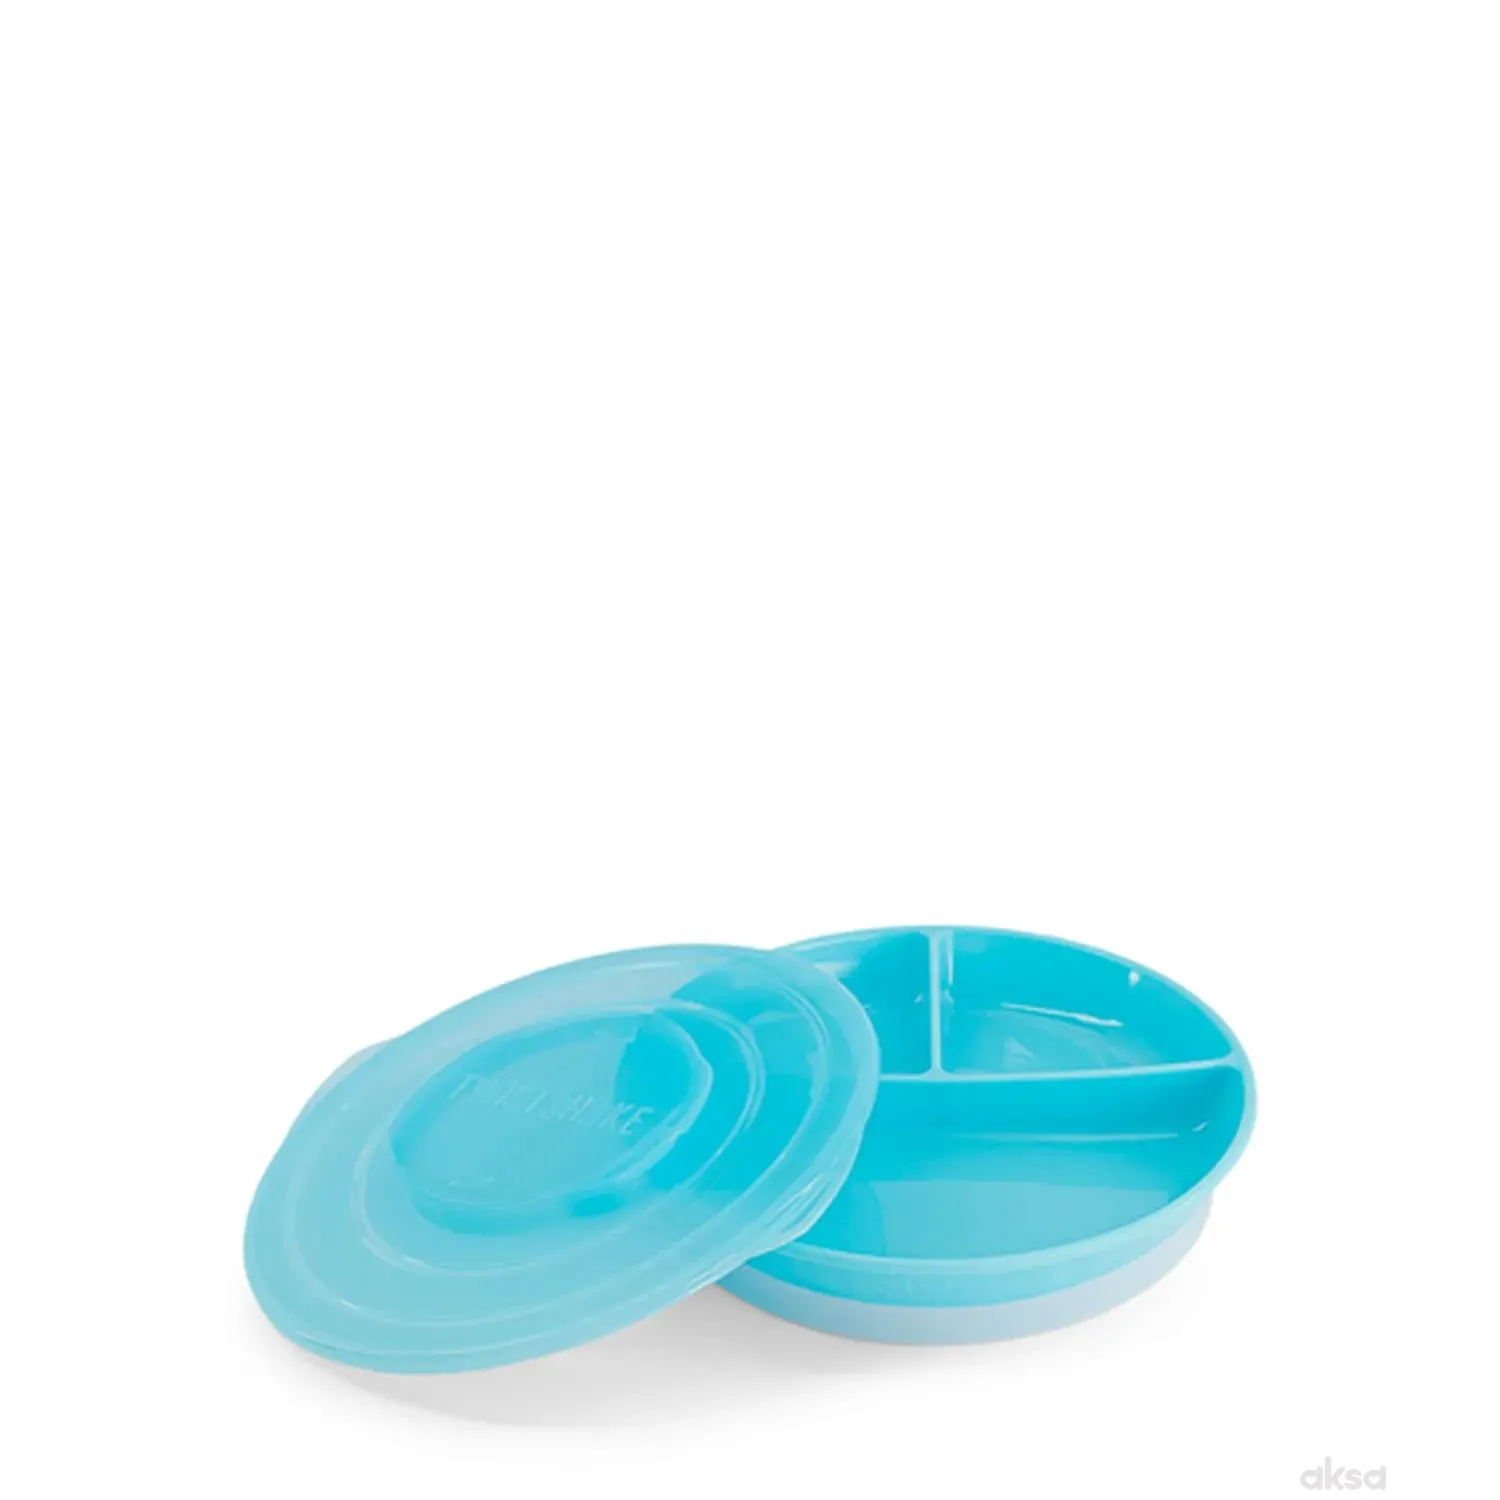 TS tanjir podeljeni 6m+ pastelna plava 